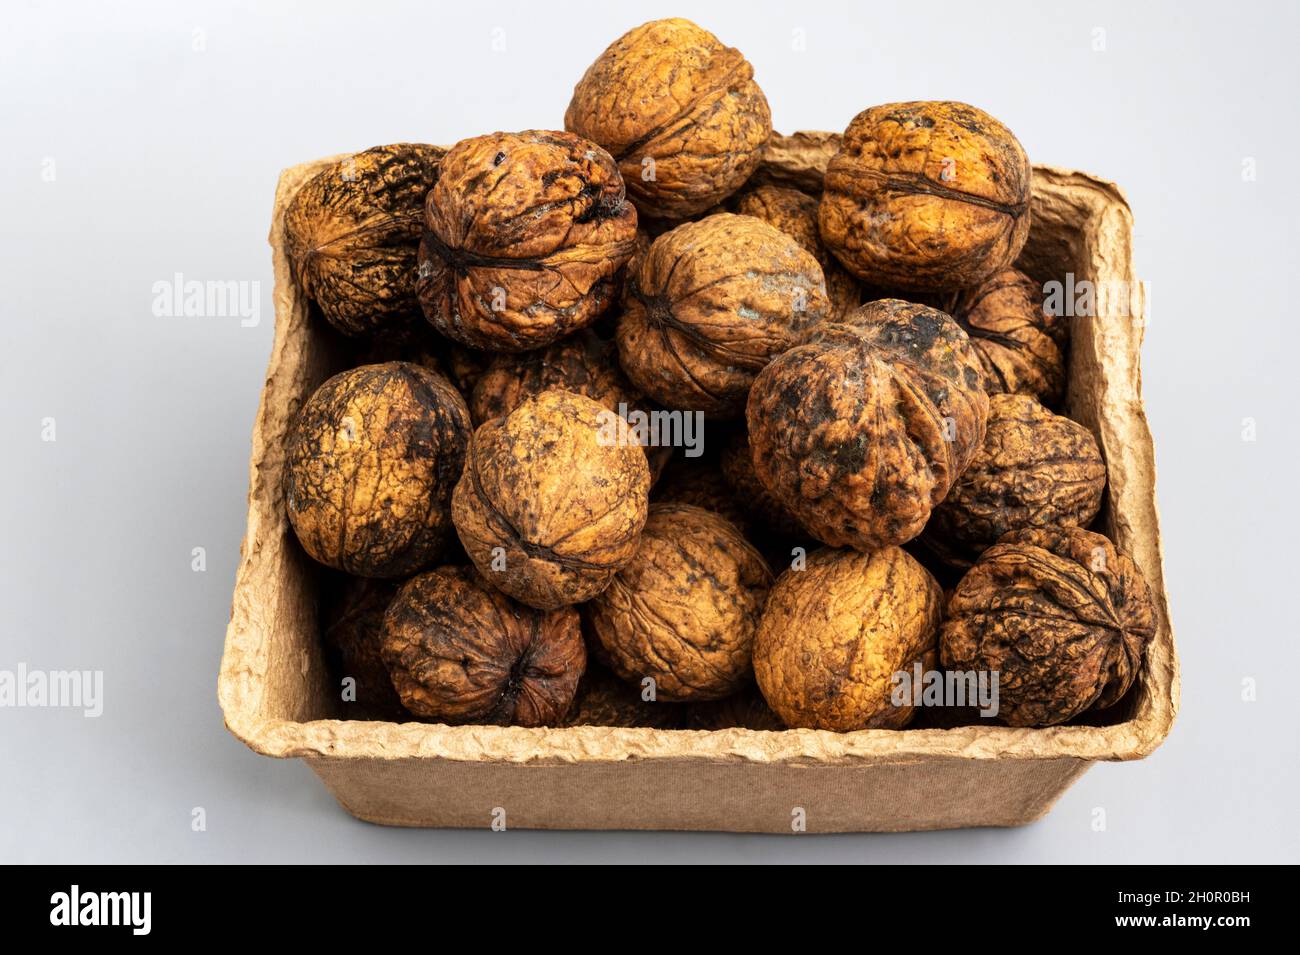 English garden fresh walnuts Stock Photo